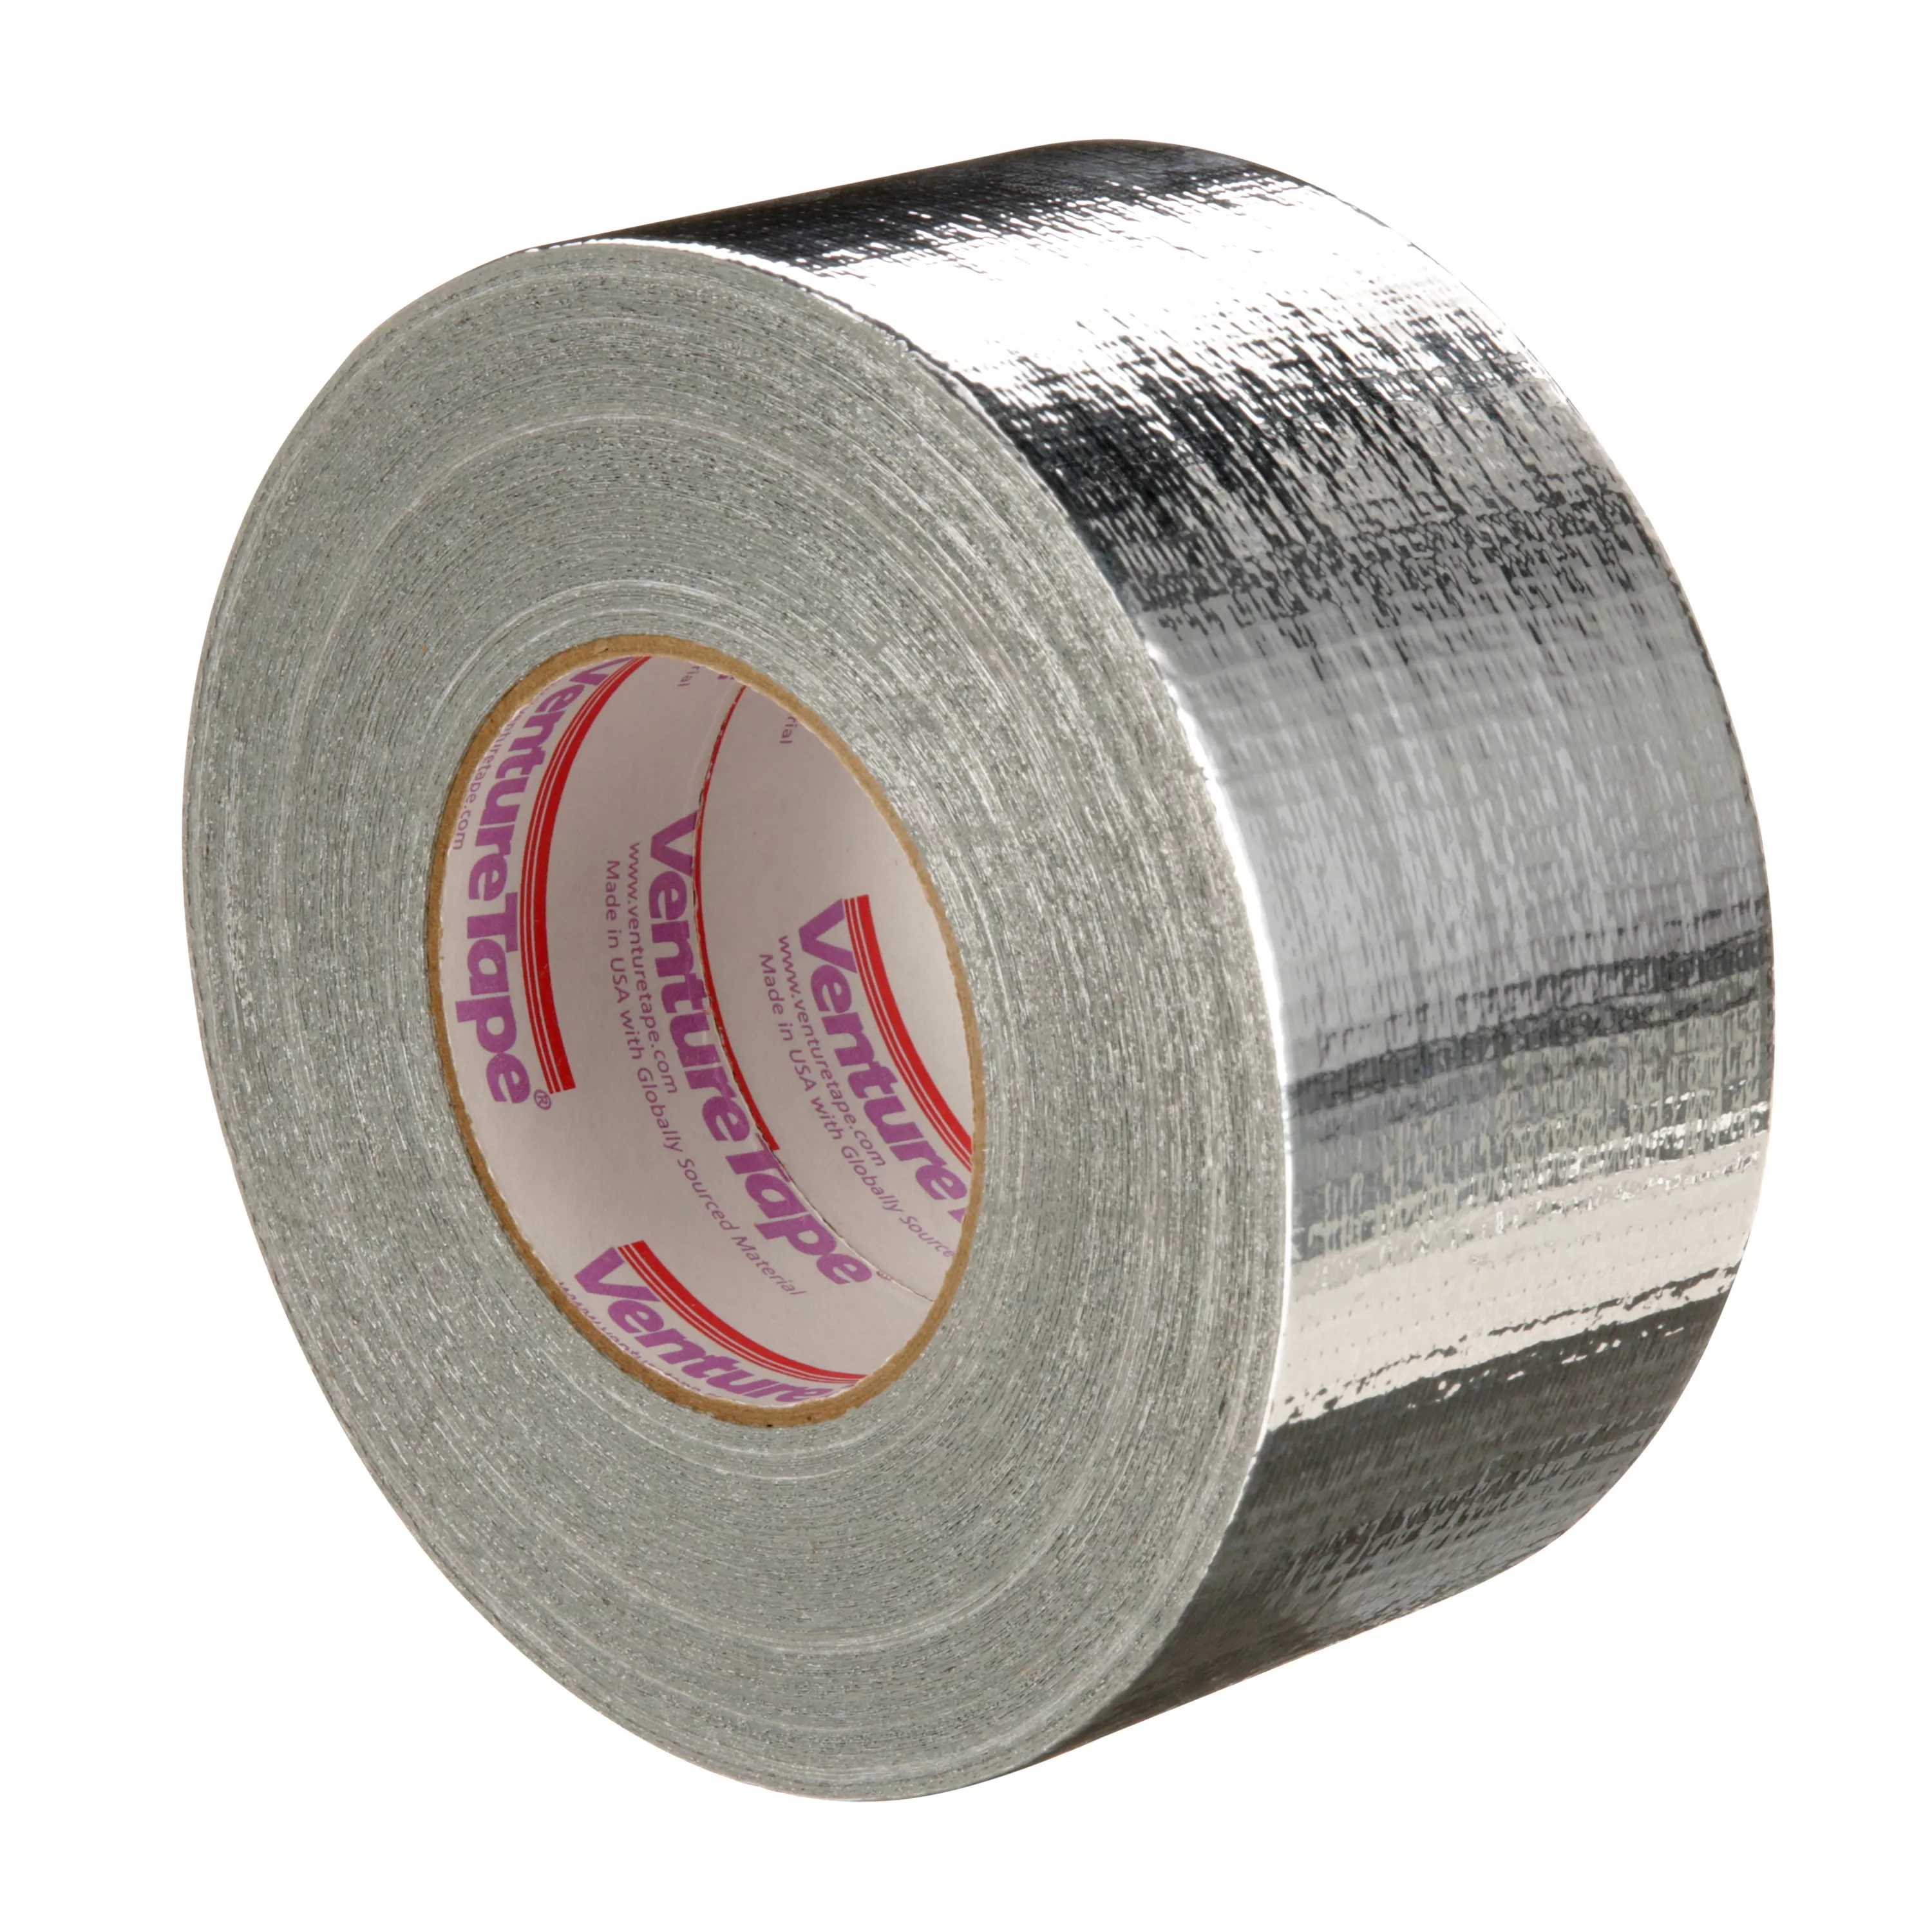 SKU 7010296281 | 3M™ Venture Tape™ Metallized Cloth Duct Tape 1502